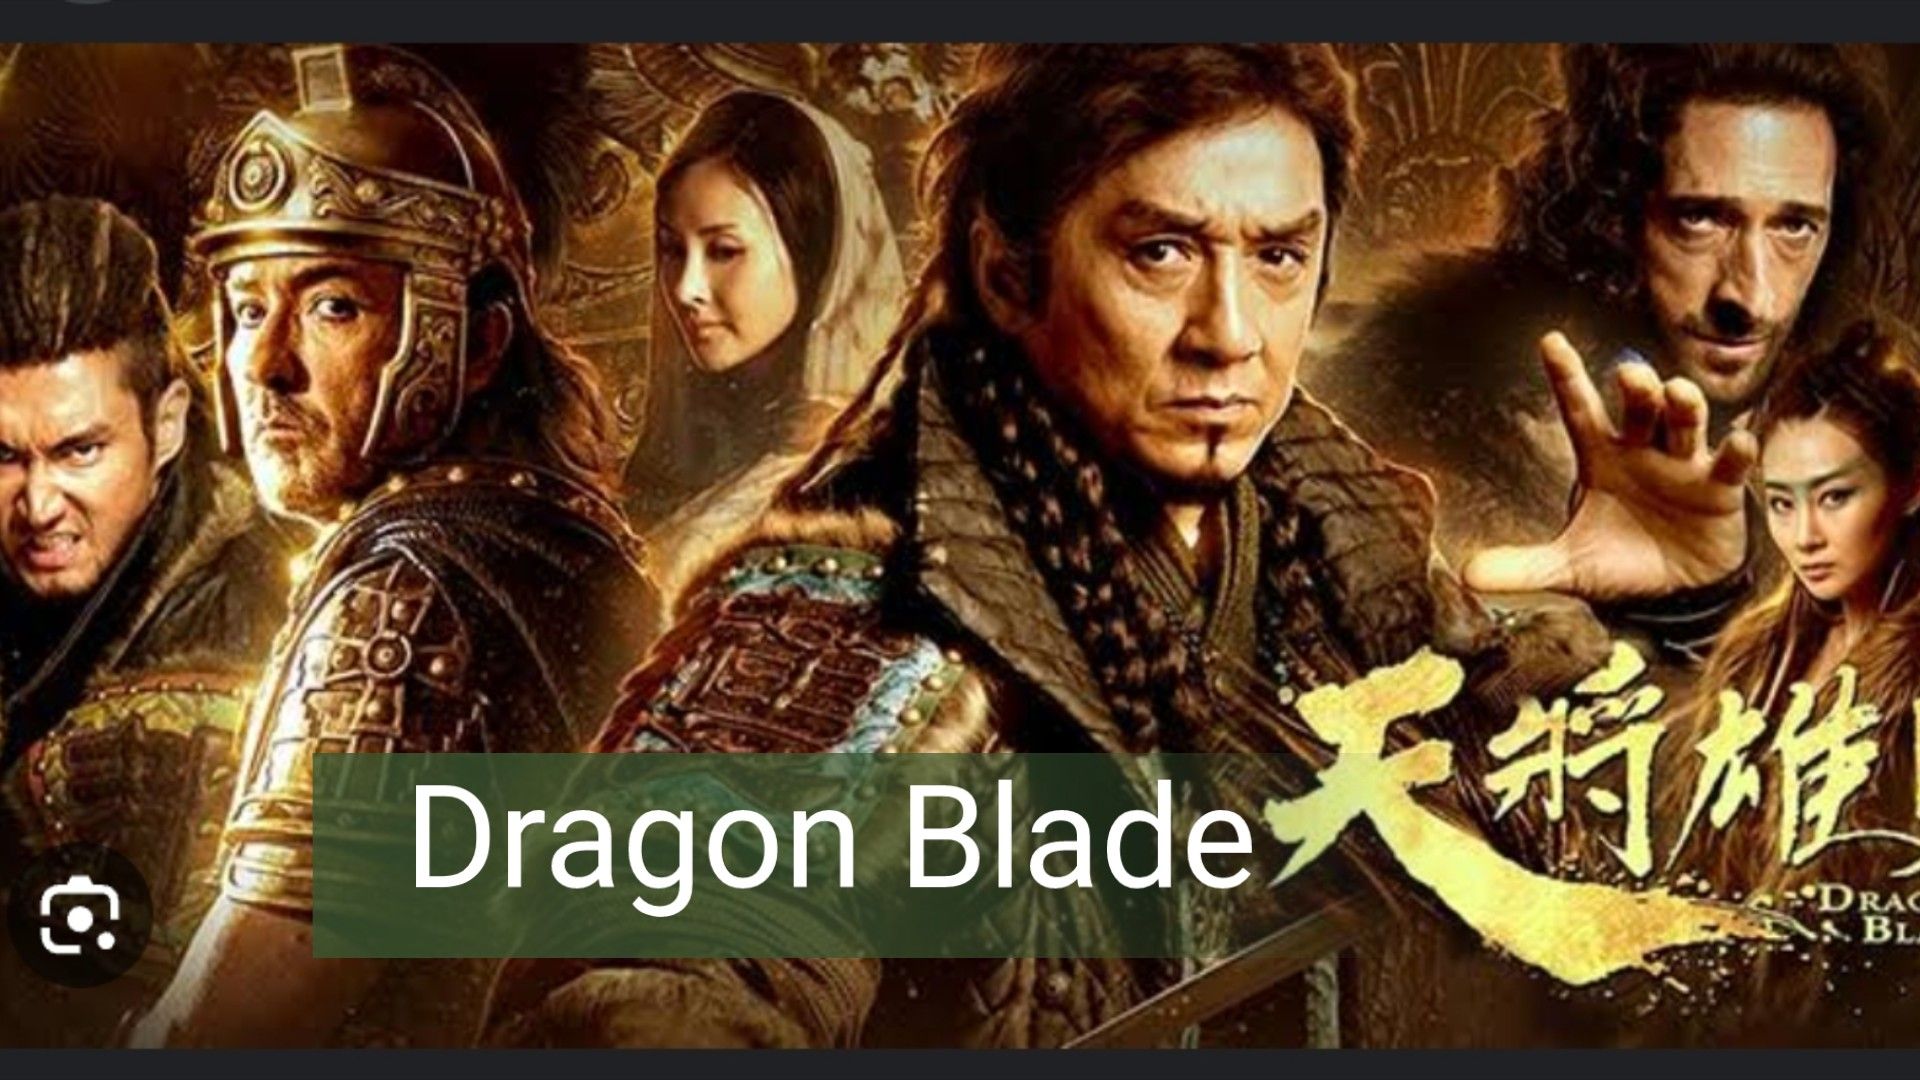 Watch Jackie Chan Lead a Warrior Dance Battle in 'Dragon Blade' (Exclusive)